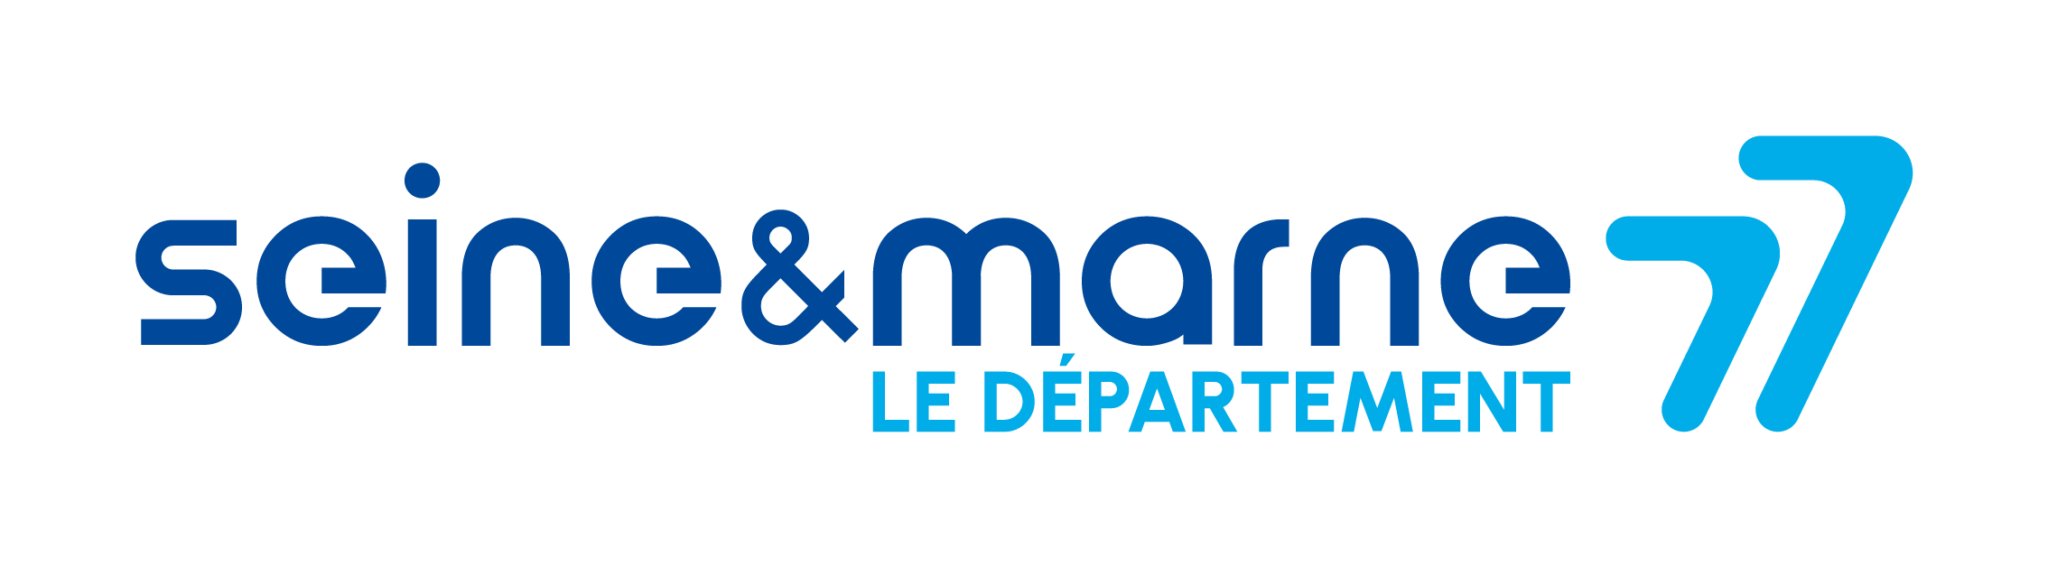 Seine et Marne 77 : Brand Short Description Type Here.